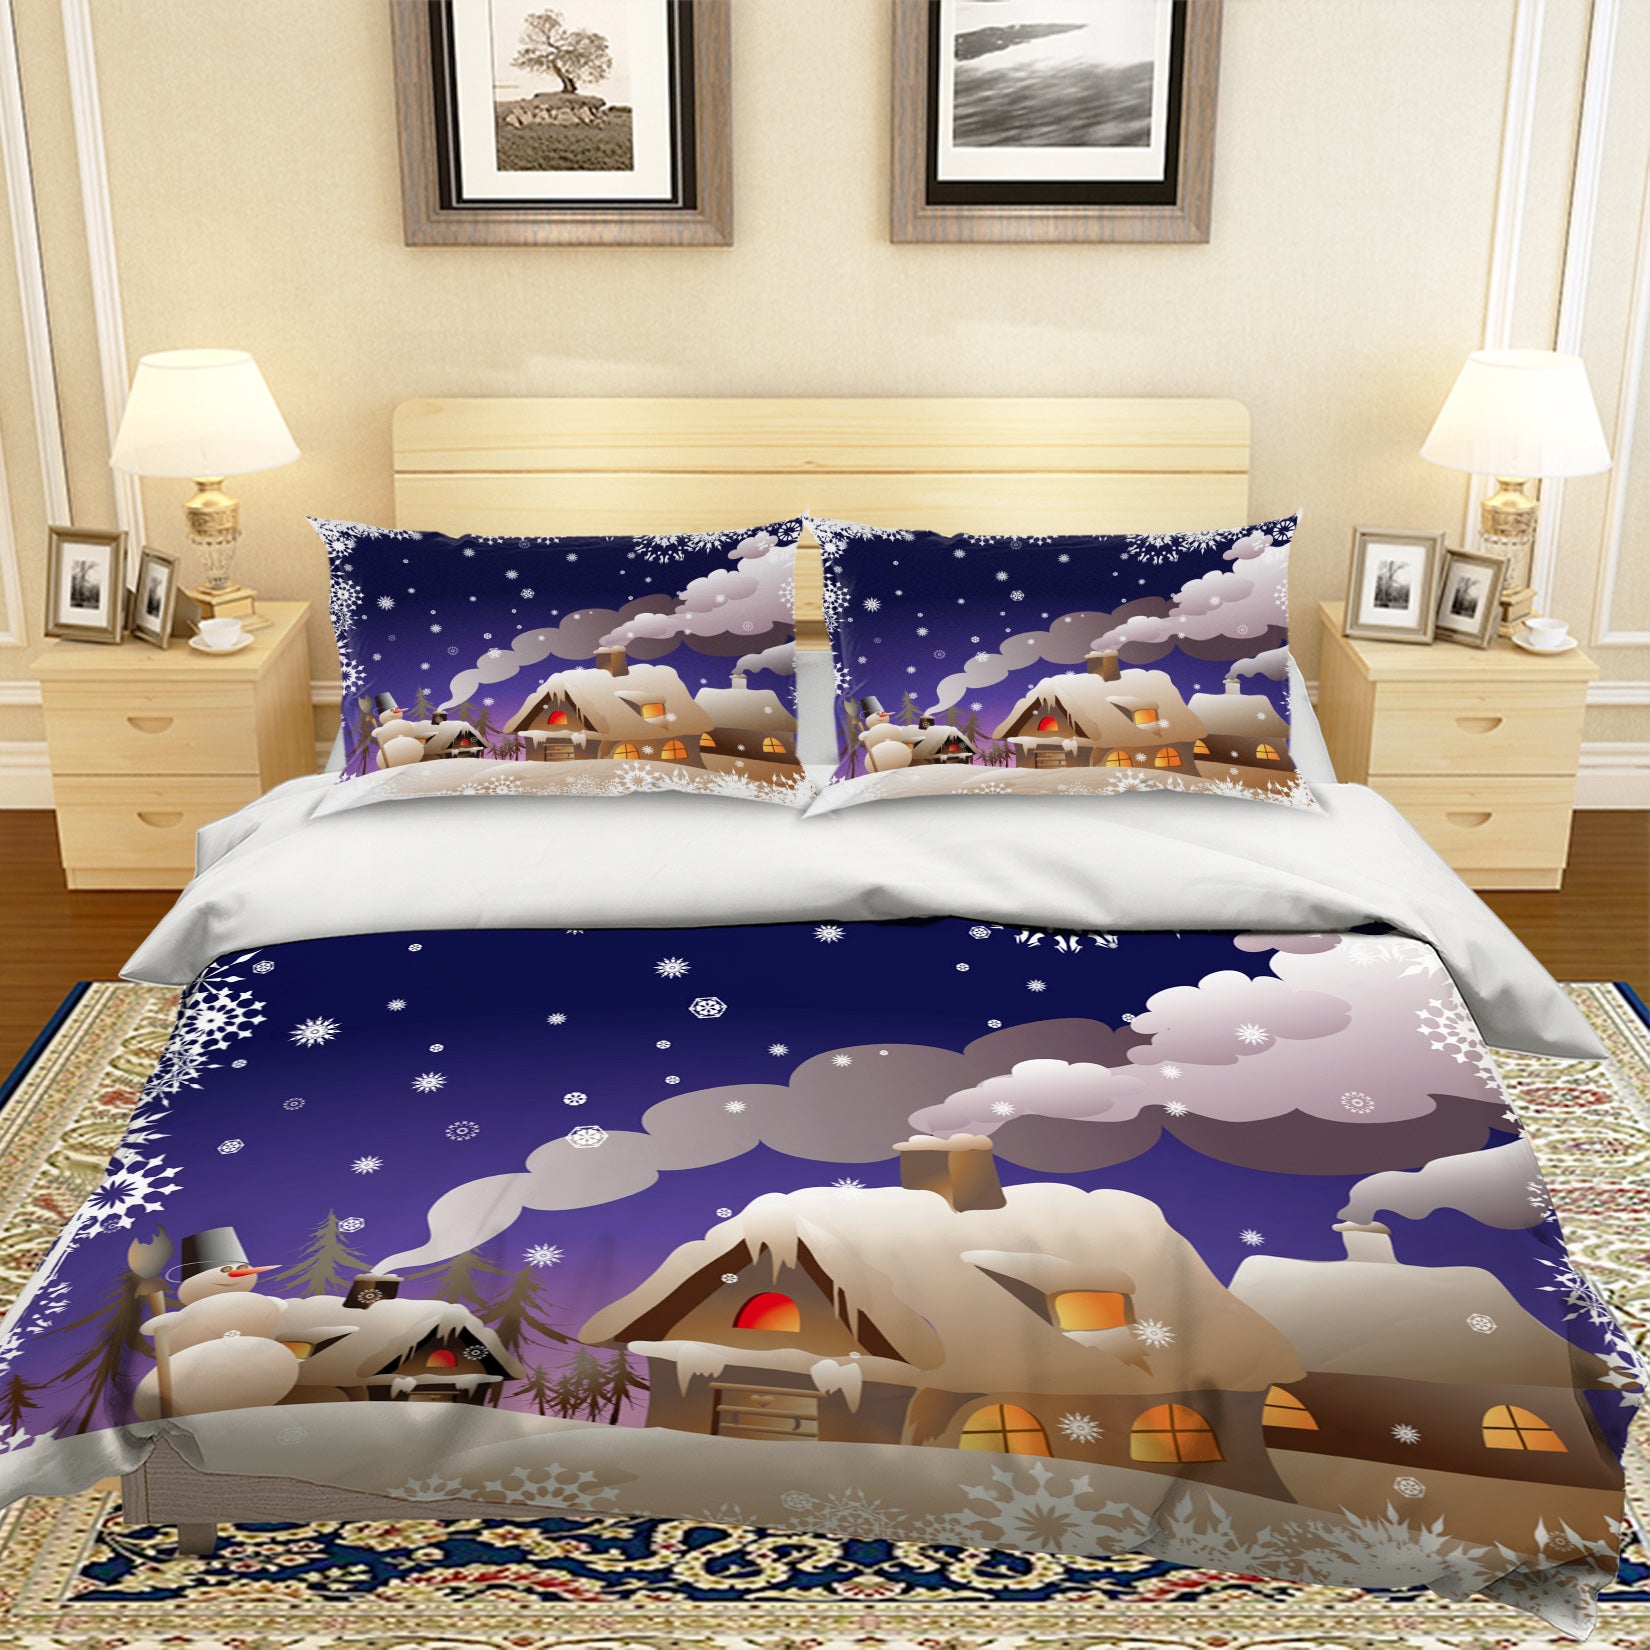 3D Chimney Houses 31129 Christmas Quilt Duvet Cover Xmas Bed Pillowcases